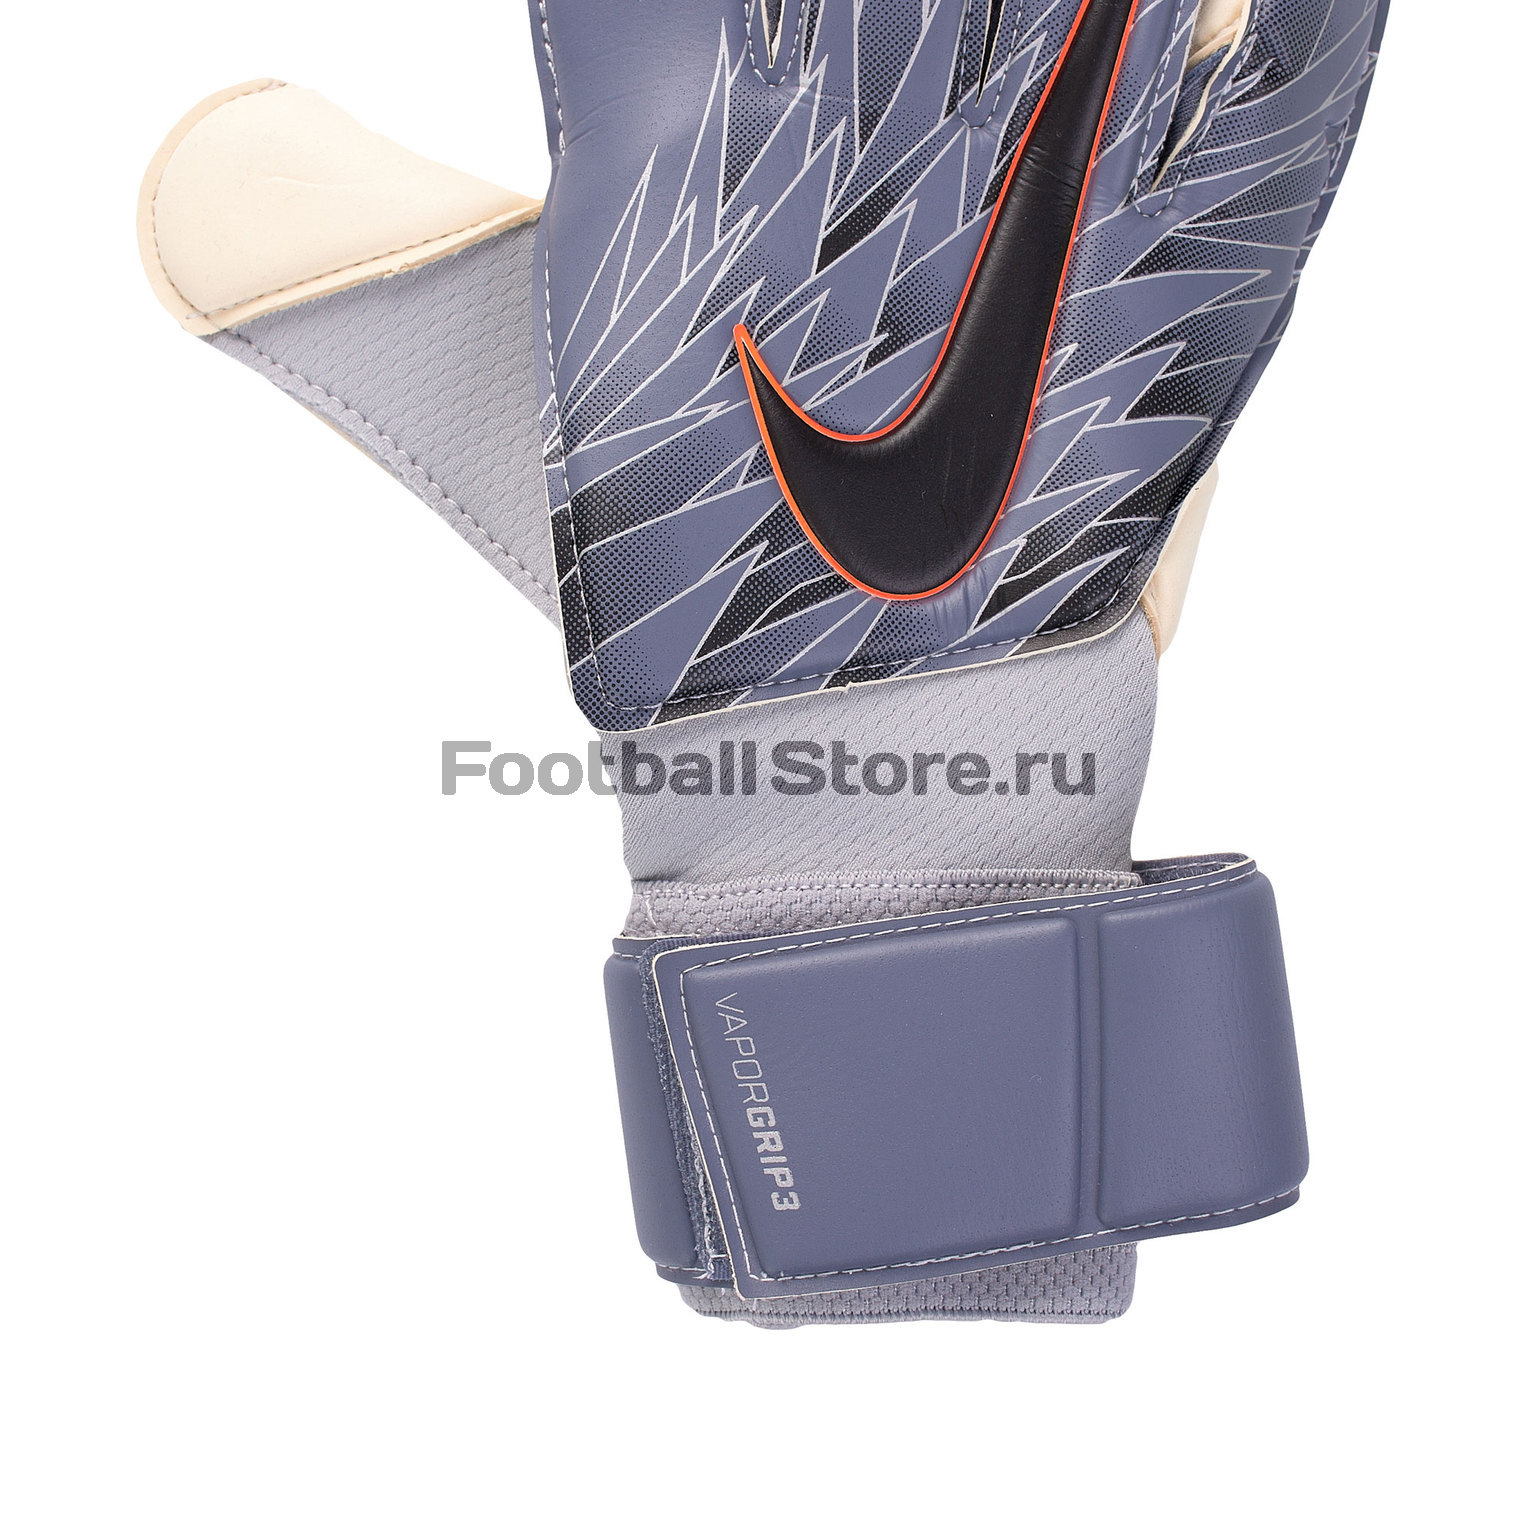 Перчатки вратарские Nike Vapor Grip 3 GS3373-490